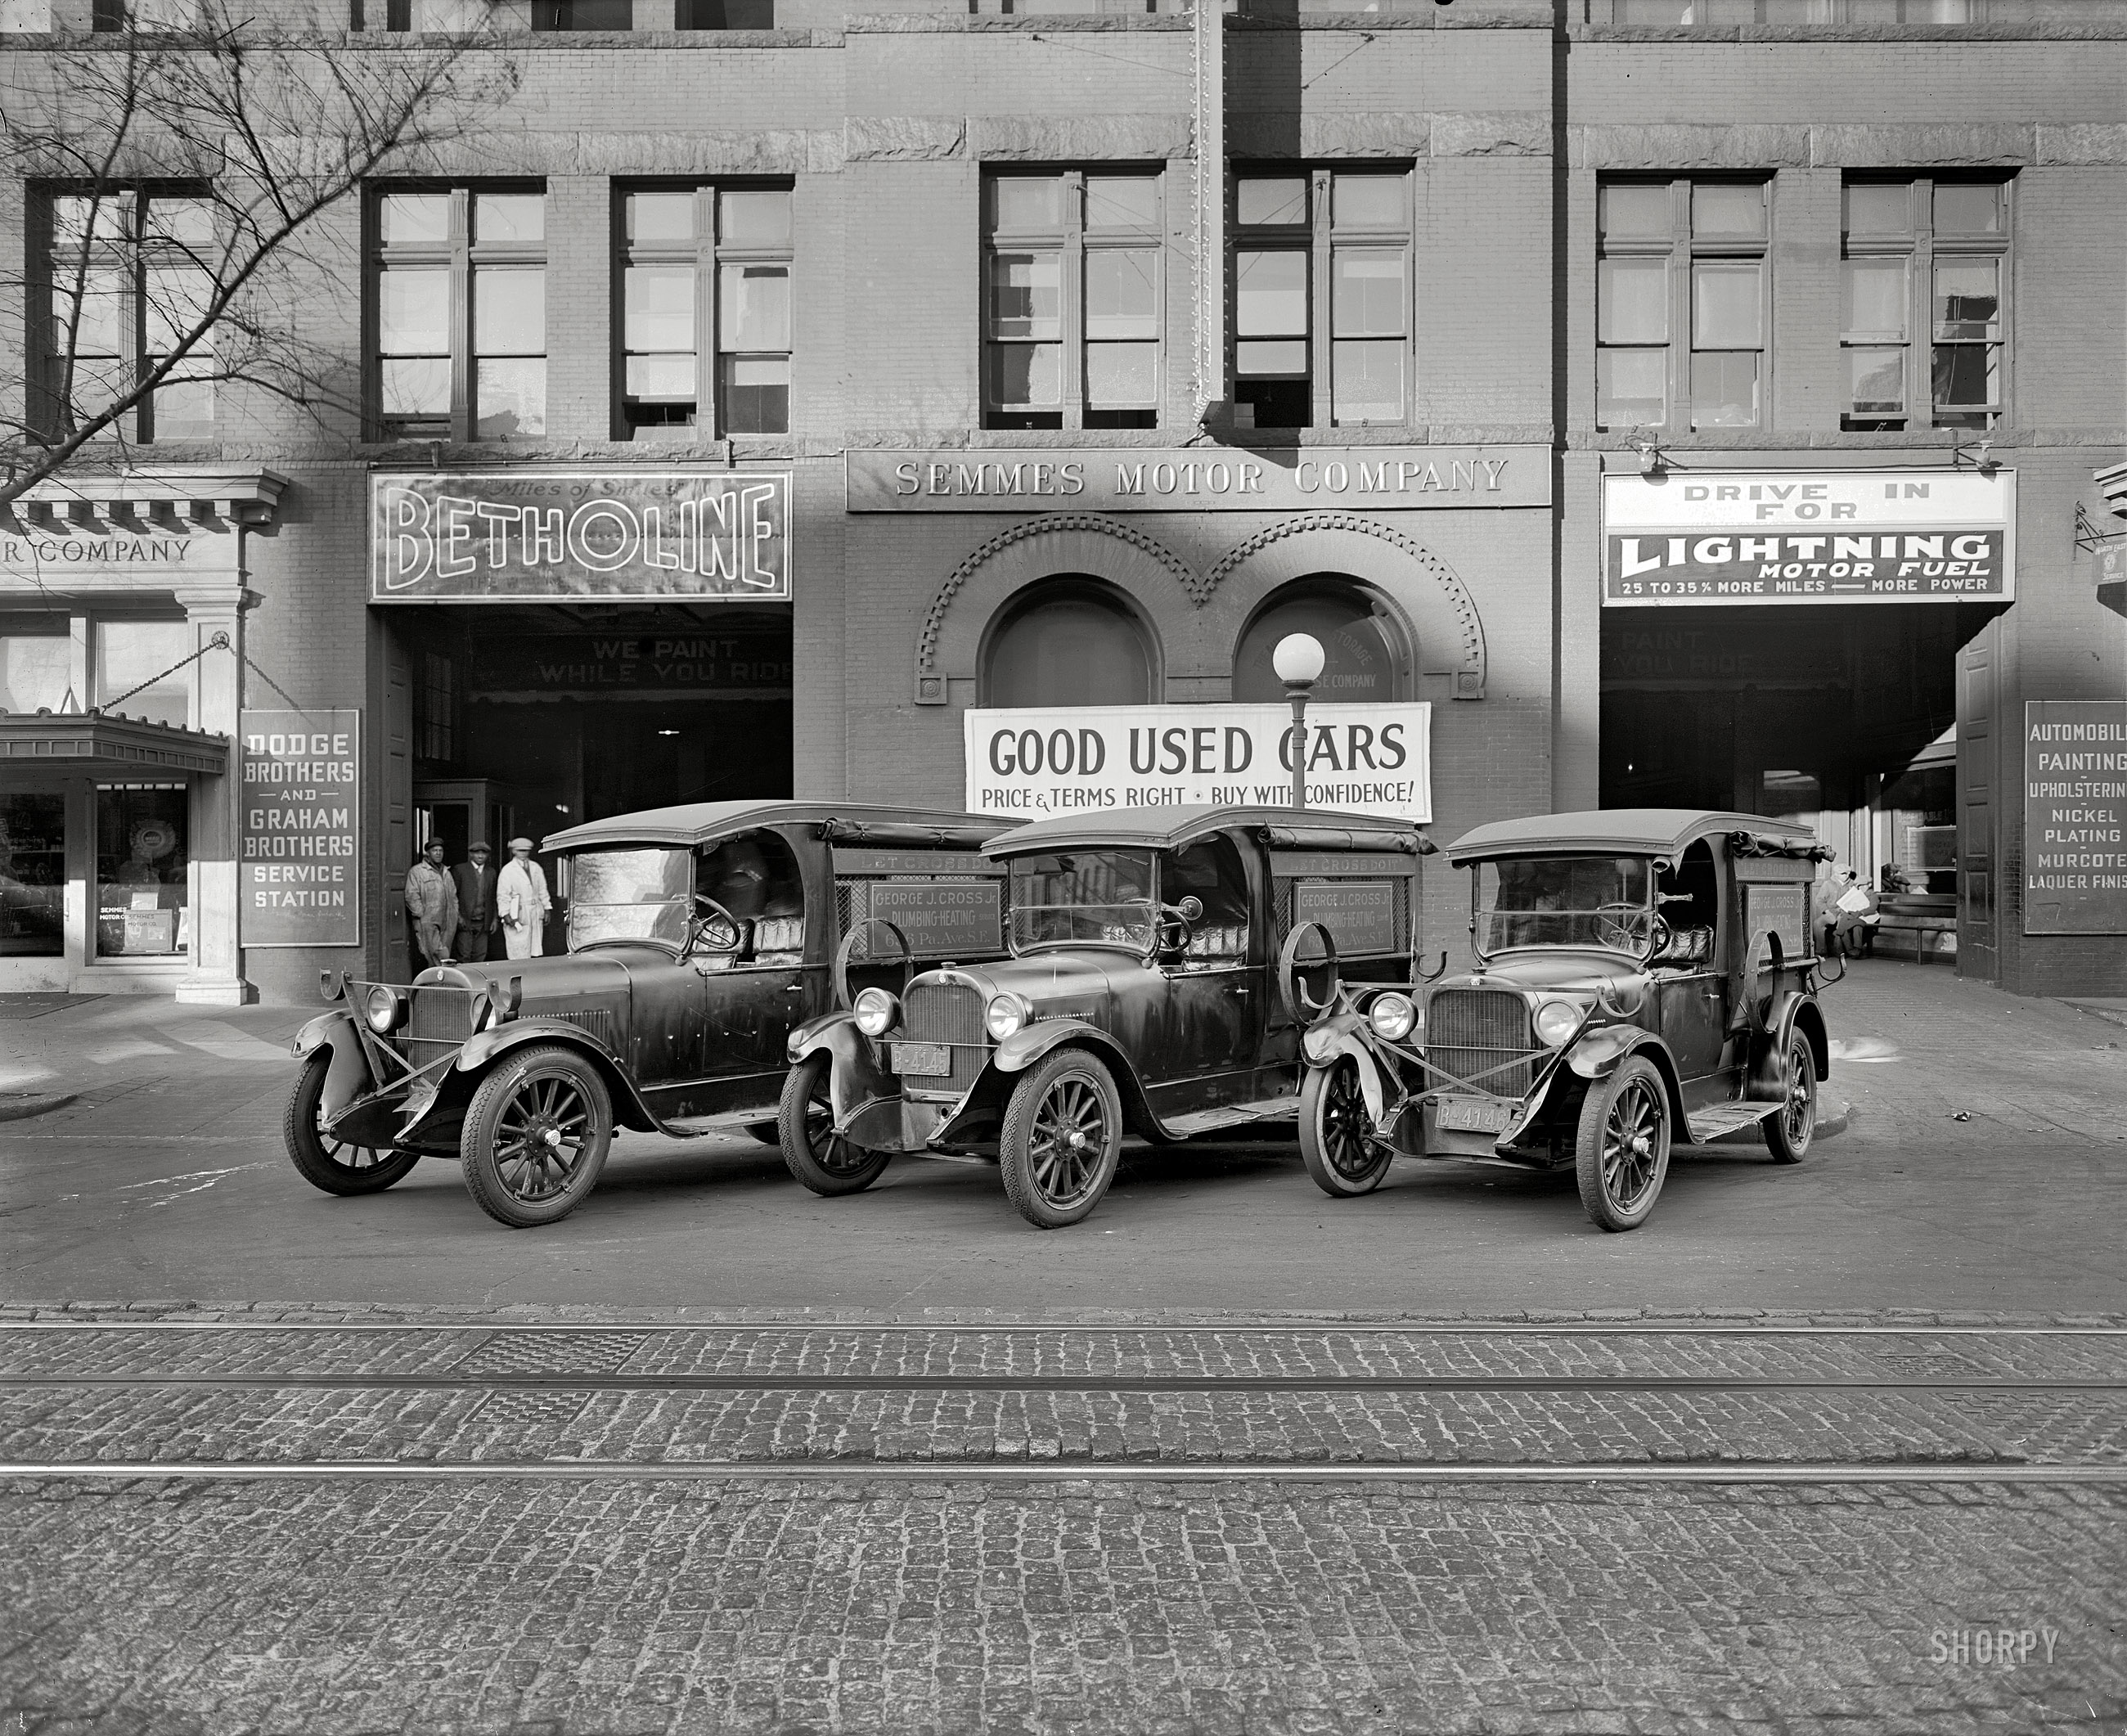 Washington, D.C., circa 1927. "Cross trucks, Semmes Motor Co." Headquarters for Good Used Cars. National Photo Company glass negative. View full size.